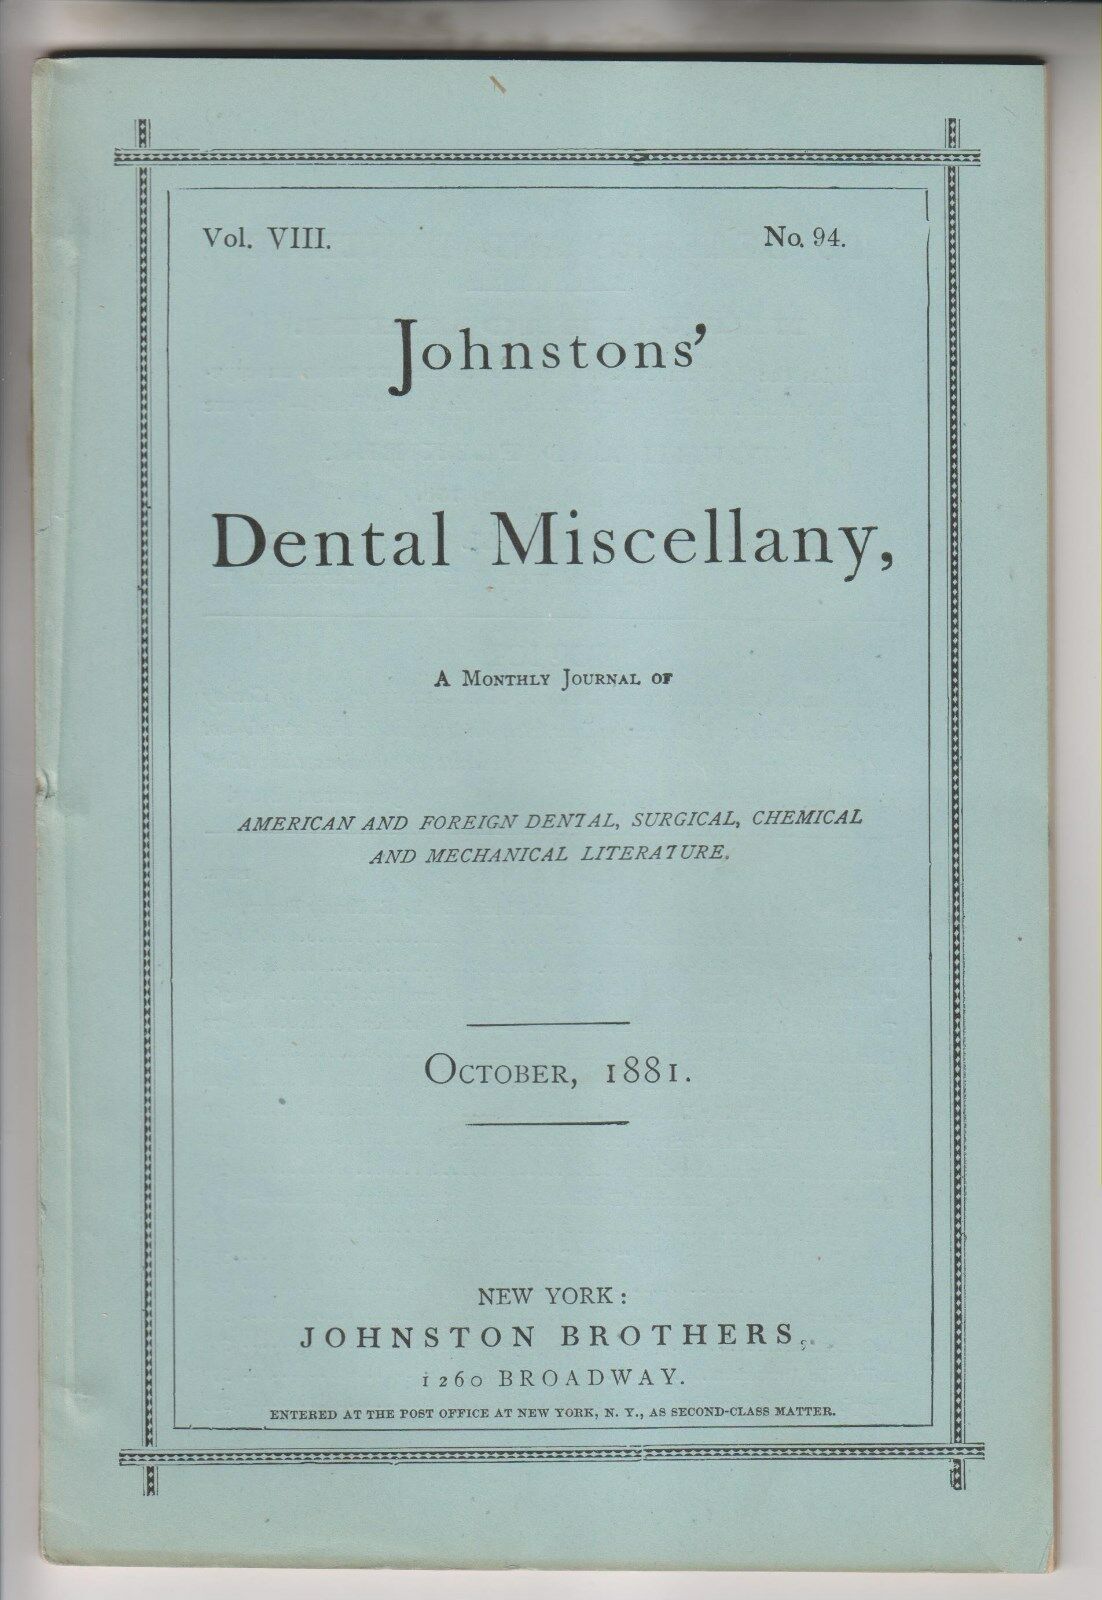 October 1881 Publication - Johnstons' Dental Miscellany - Johnston Brothers Nyc